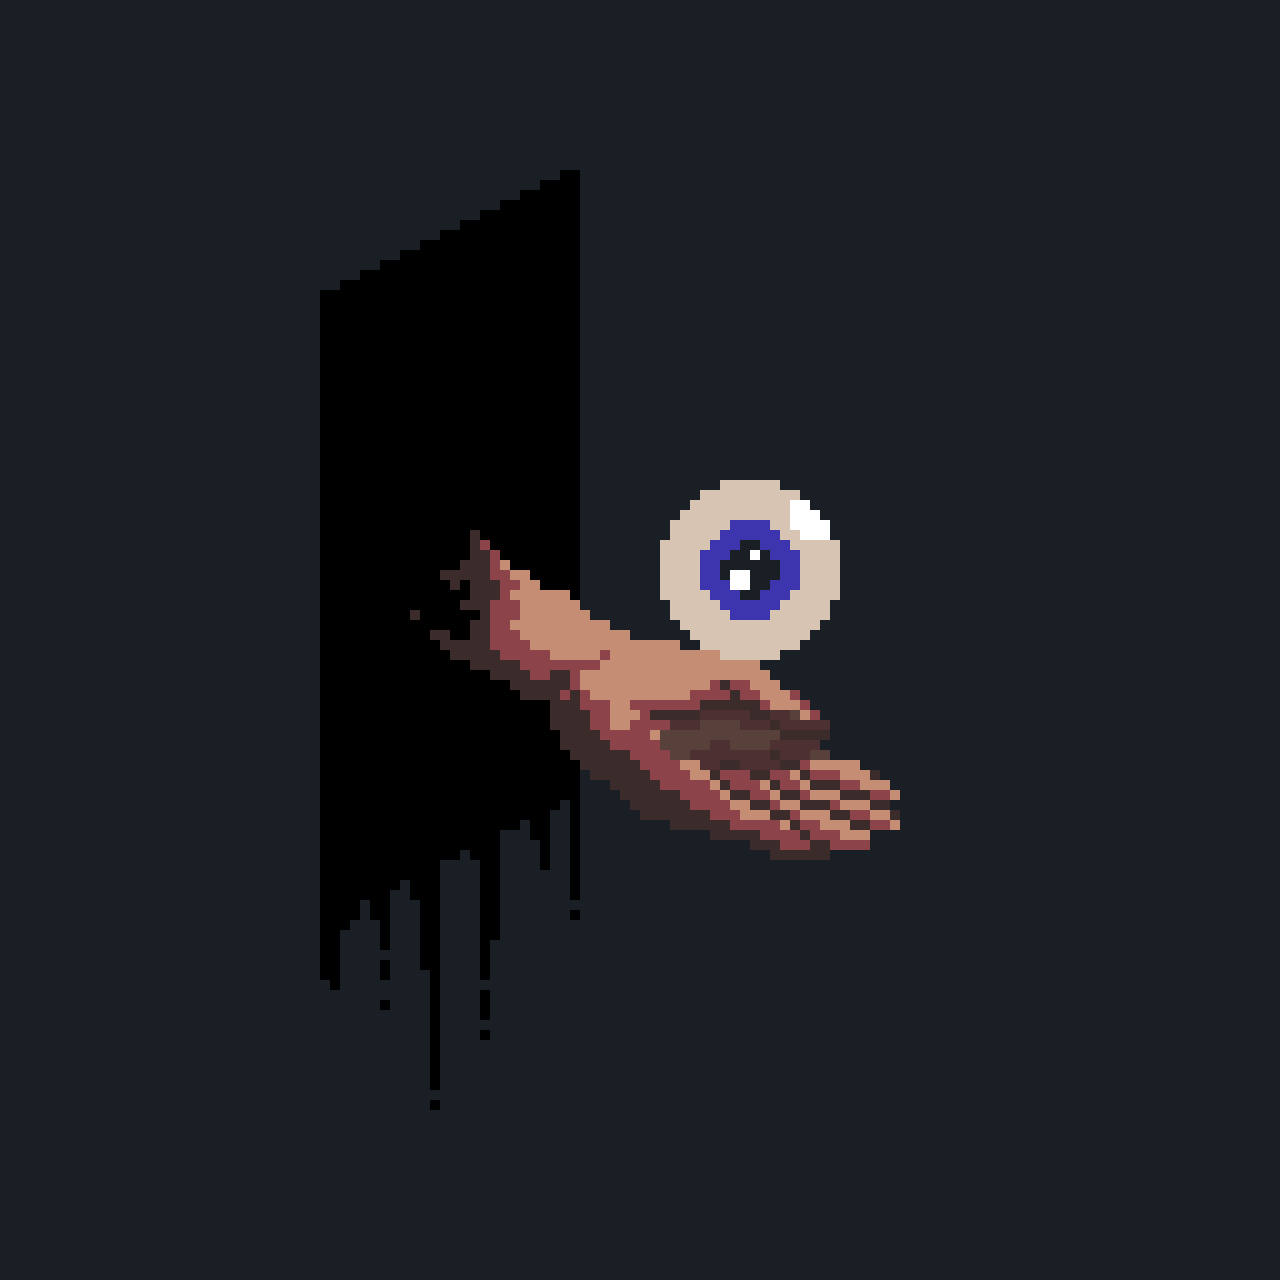 Surrealistic hand and eye